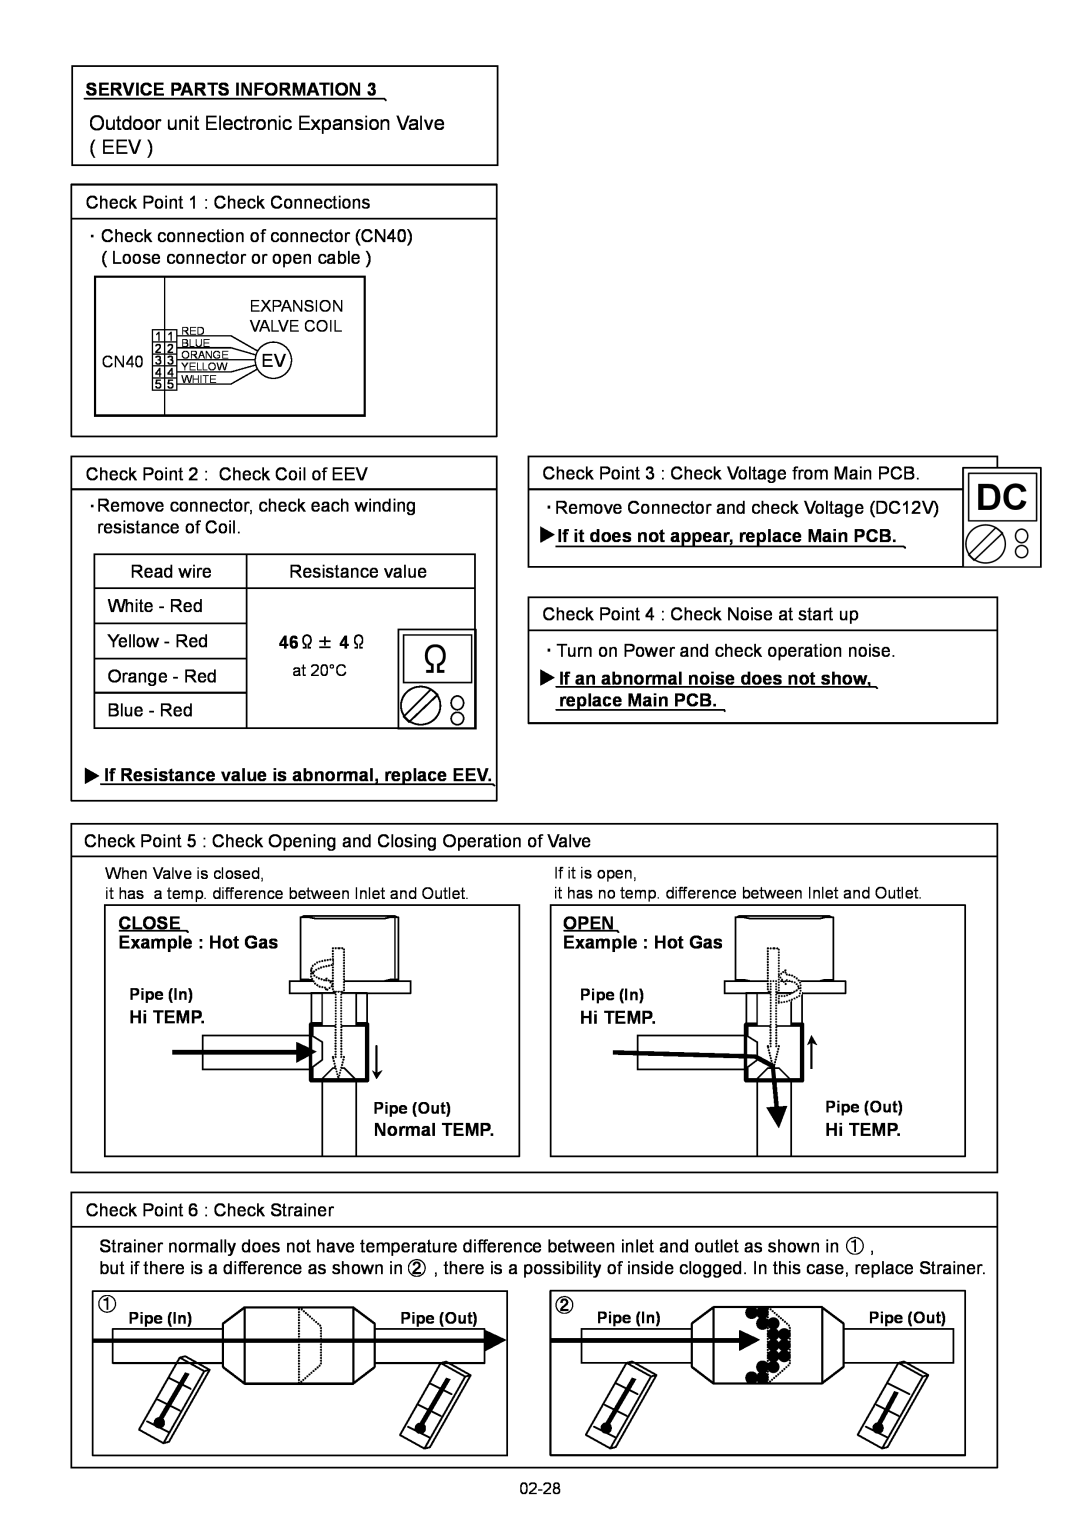 Fujitsu ASU12RL2 Service Parts Information, If Resistance value is abnormal, replace EEV, CLOSE Example Hot Gas, Hi TEMP 